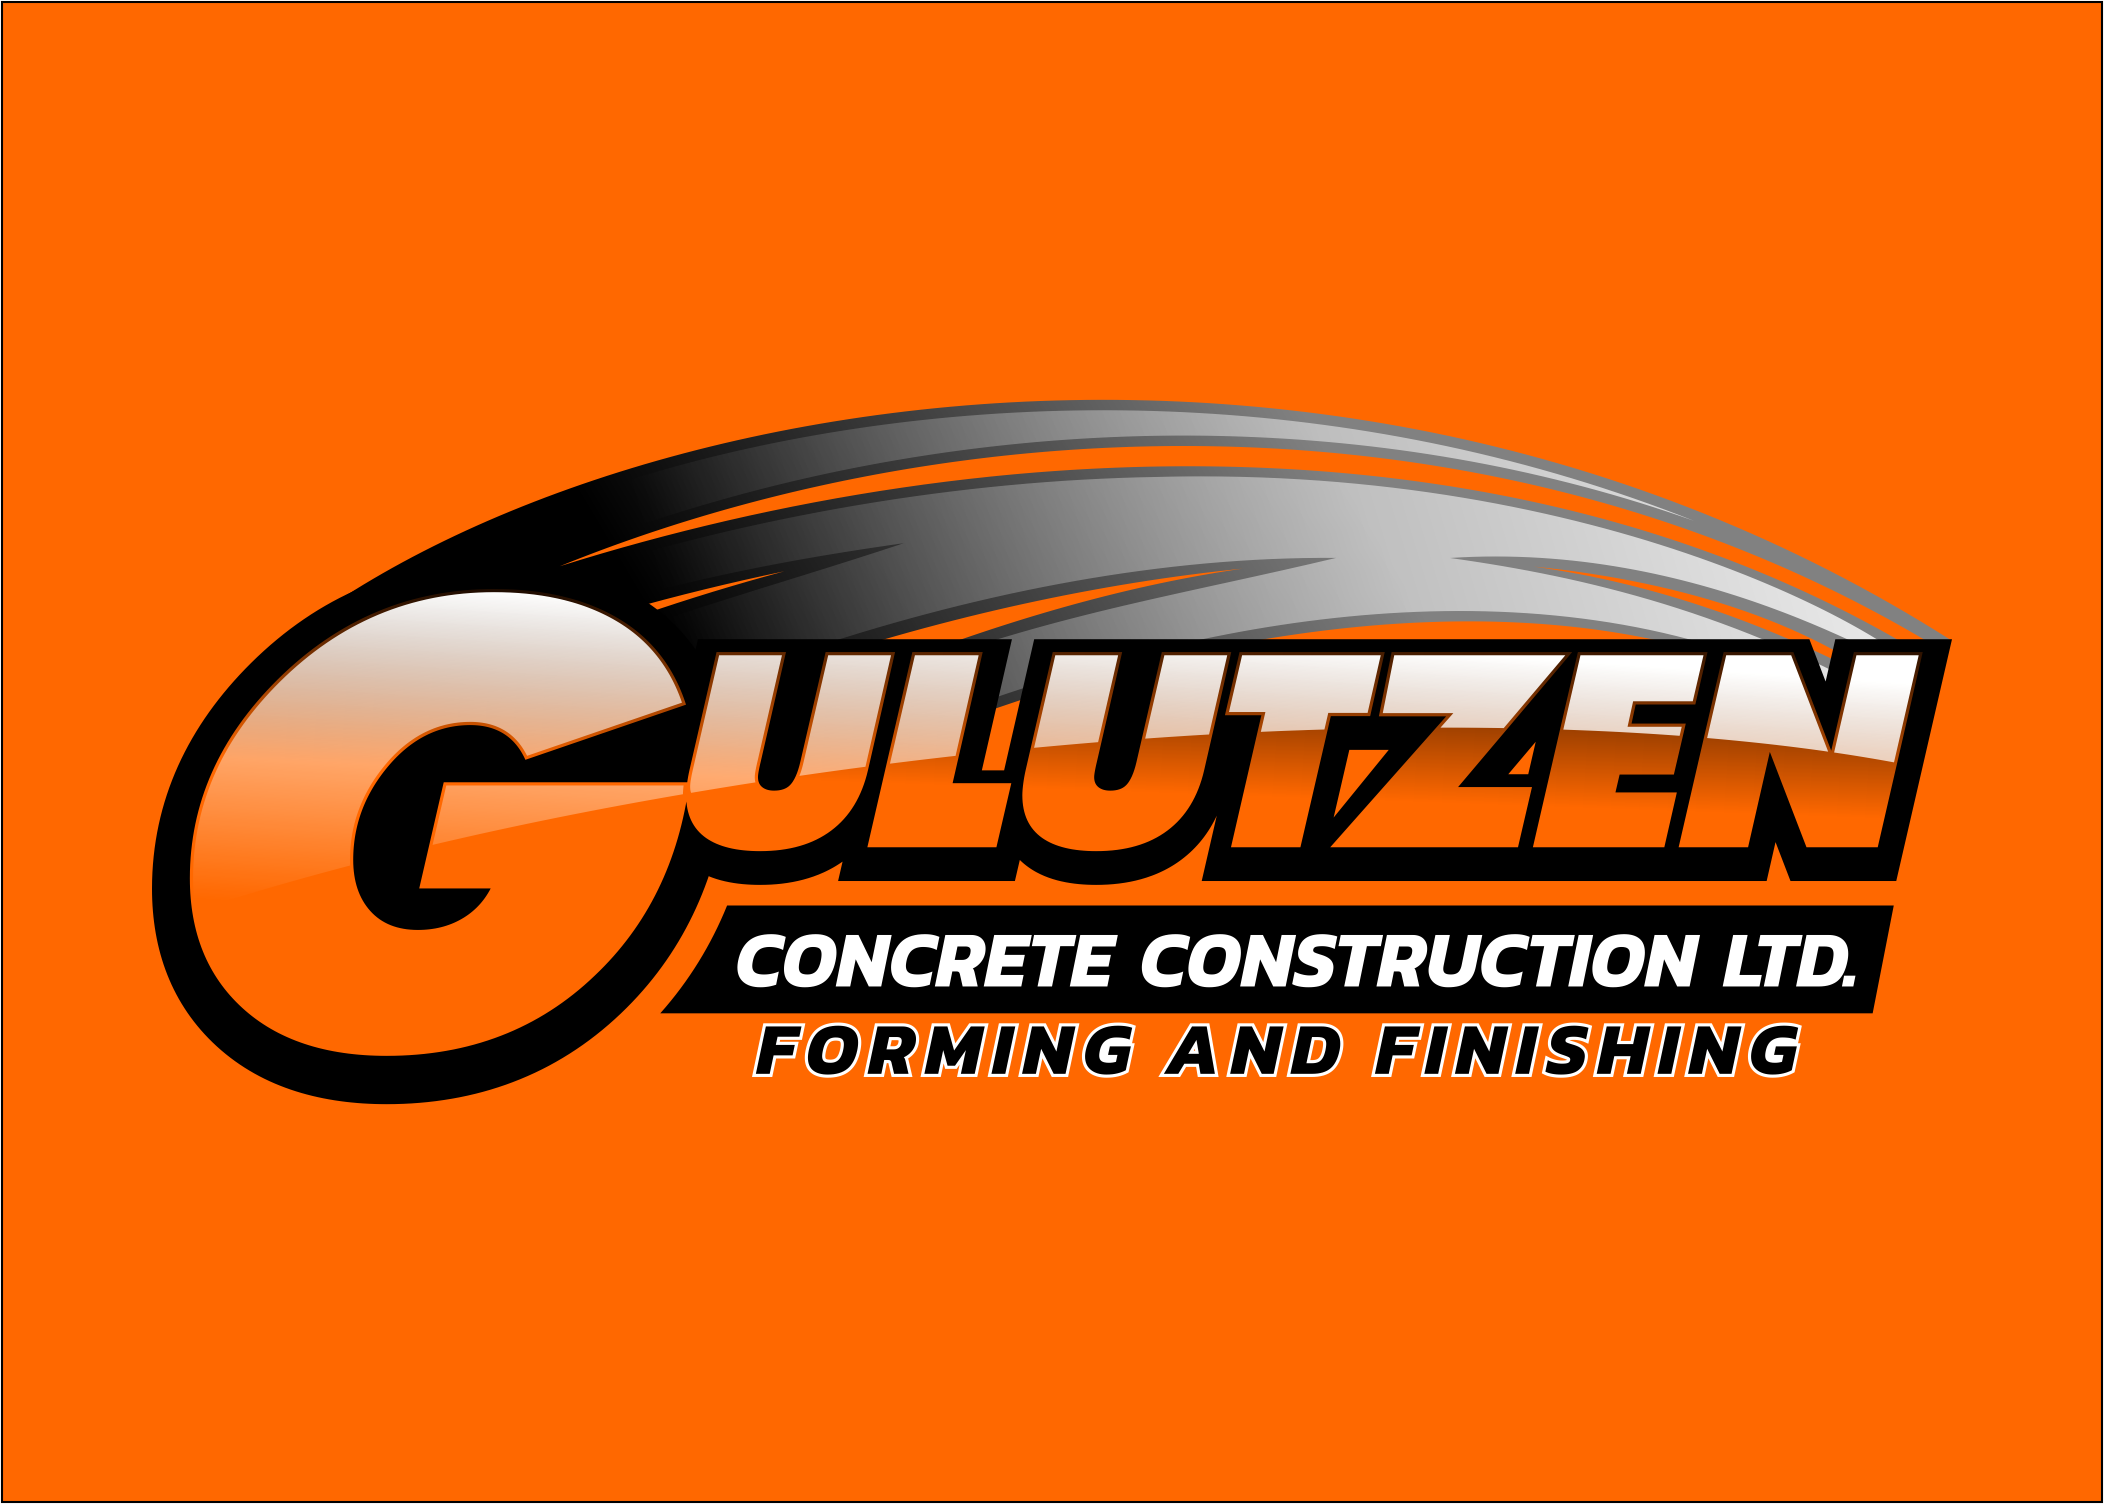 Gulutzen Concrete Construction